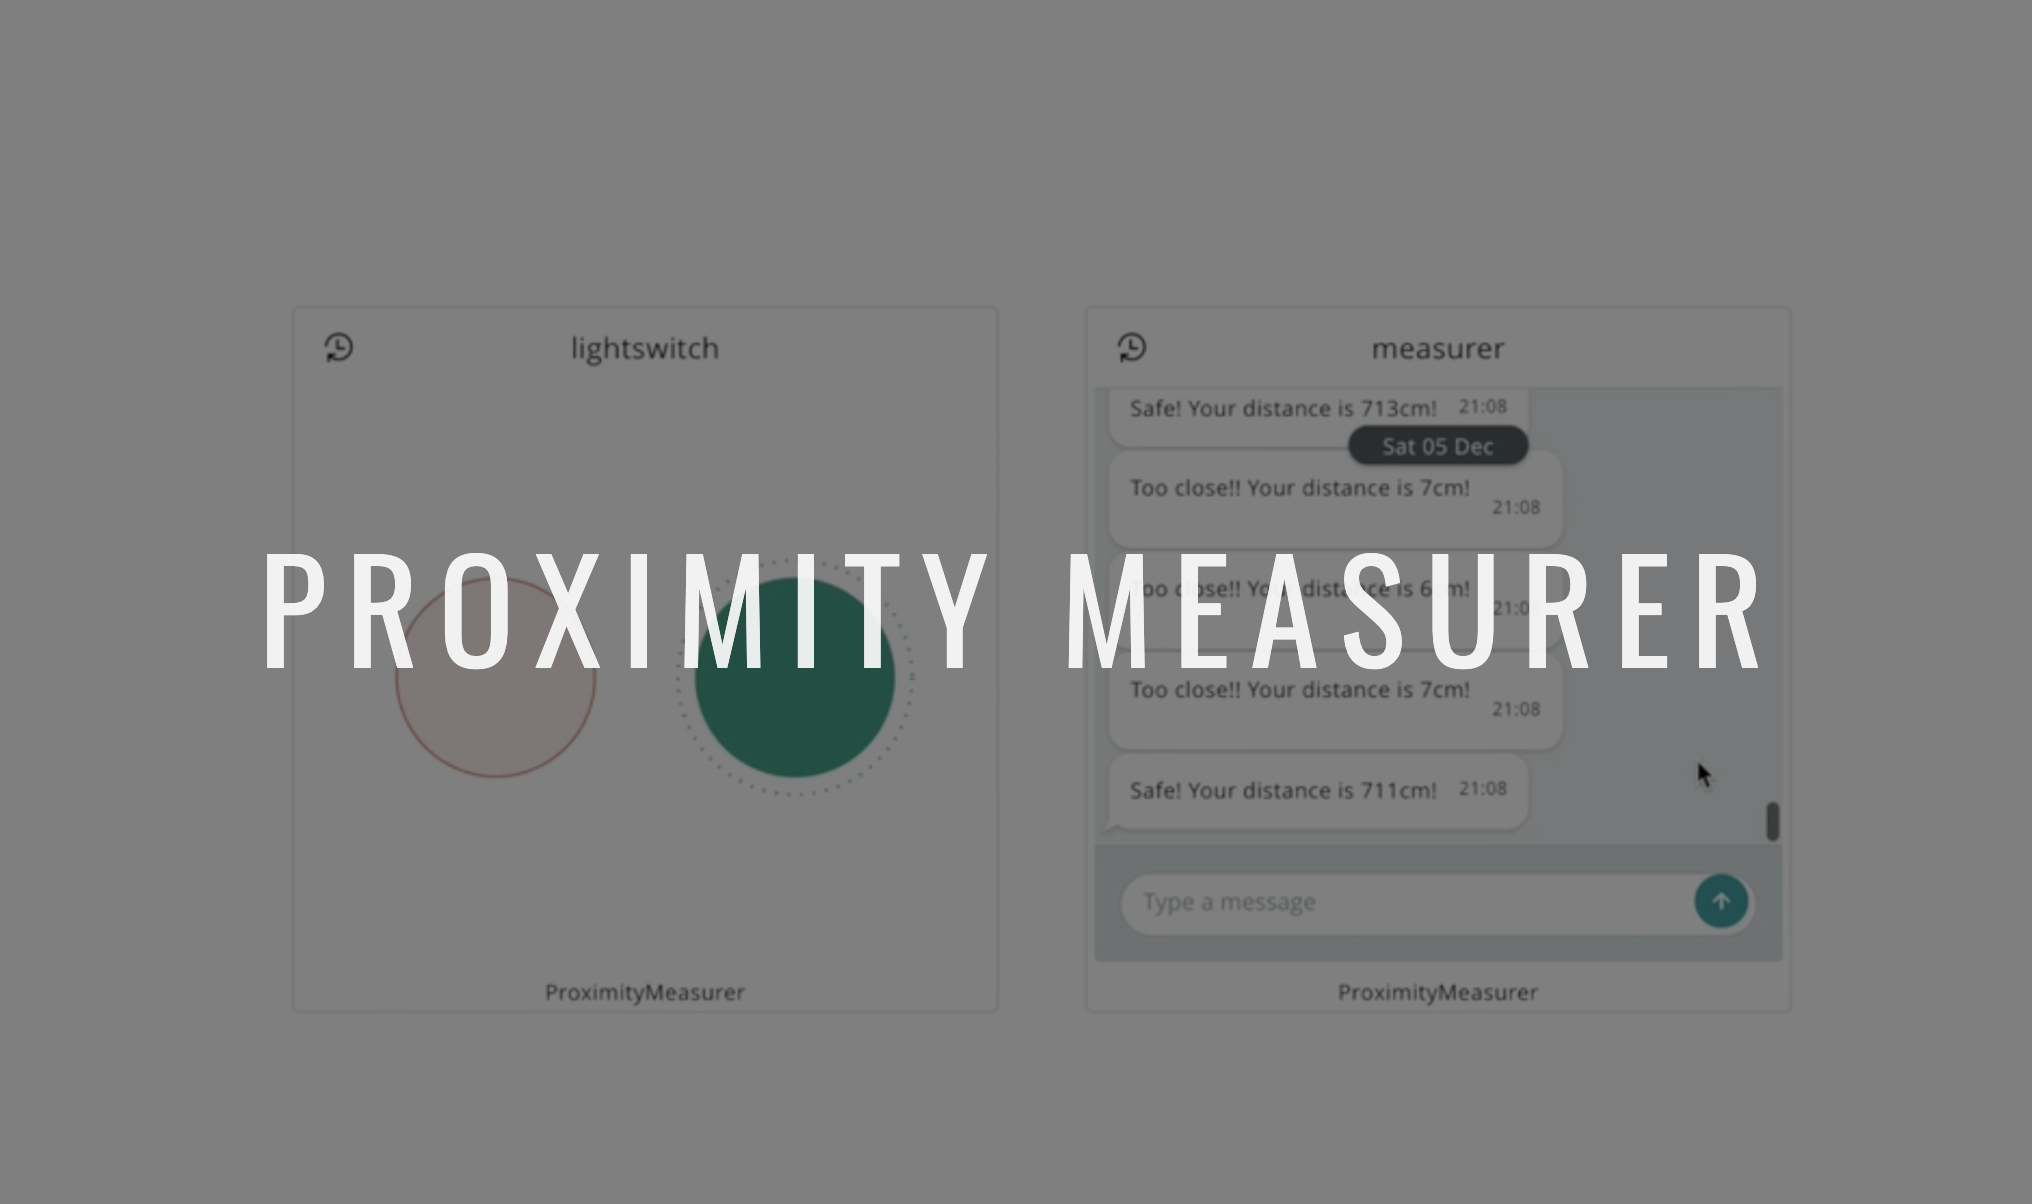 Proximity Measurer Image